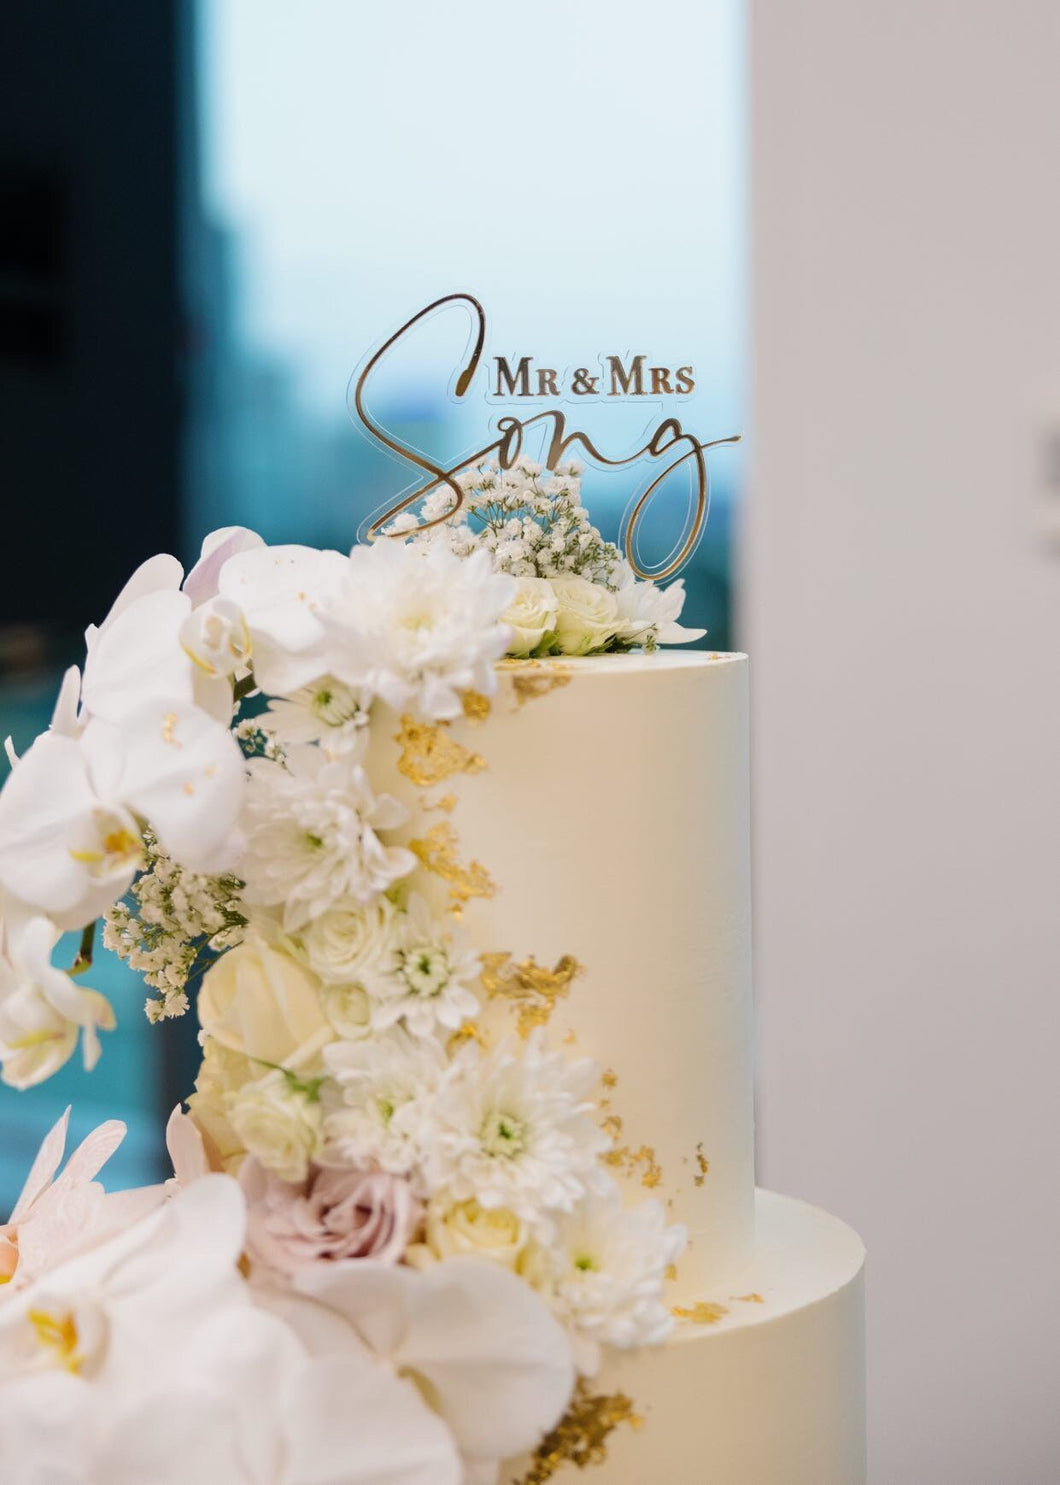 Wedding Cake Topper / Engagement Cake decor / Modern Cake topper / Gold Mirror floating cake topper /